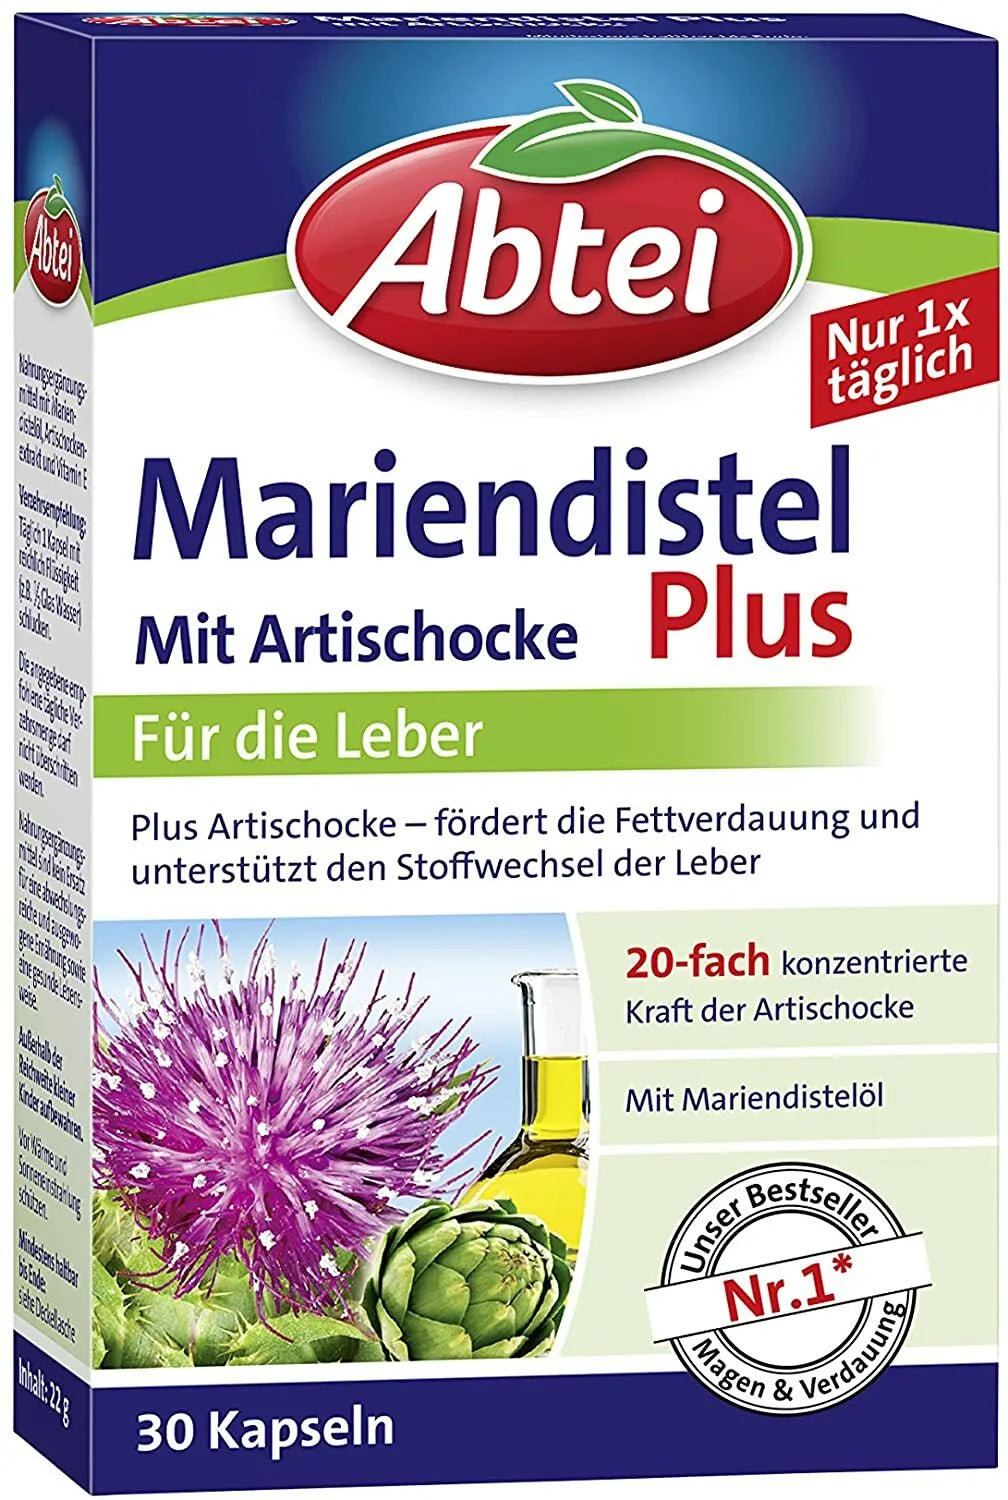 Abtei Mariendiestel Plus + Carciofo per Leberstoffwechel & Fettverdauung 30 Pz.